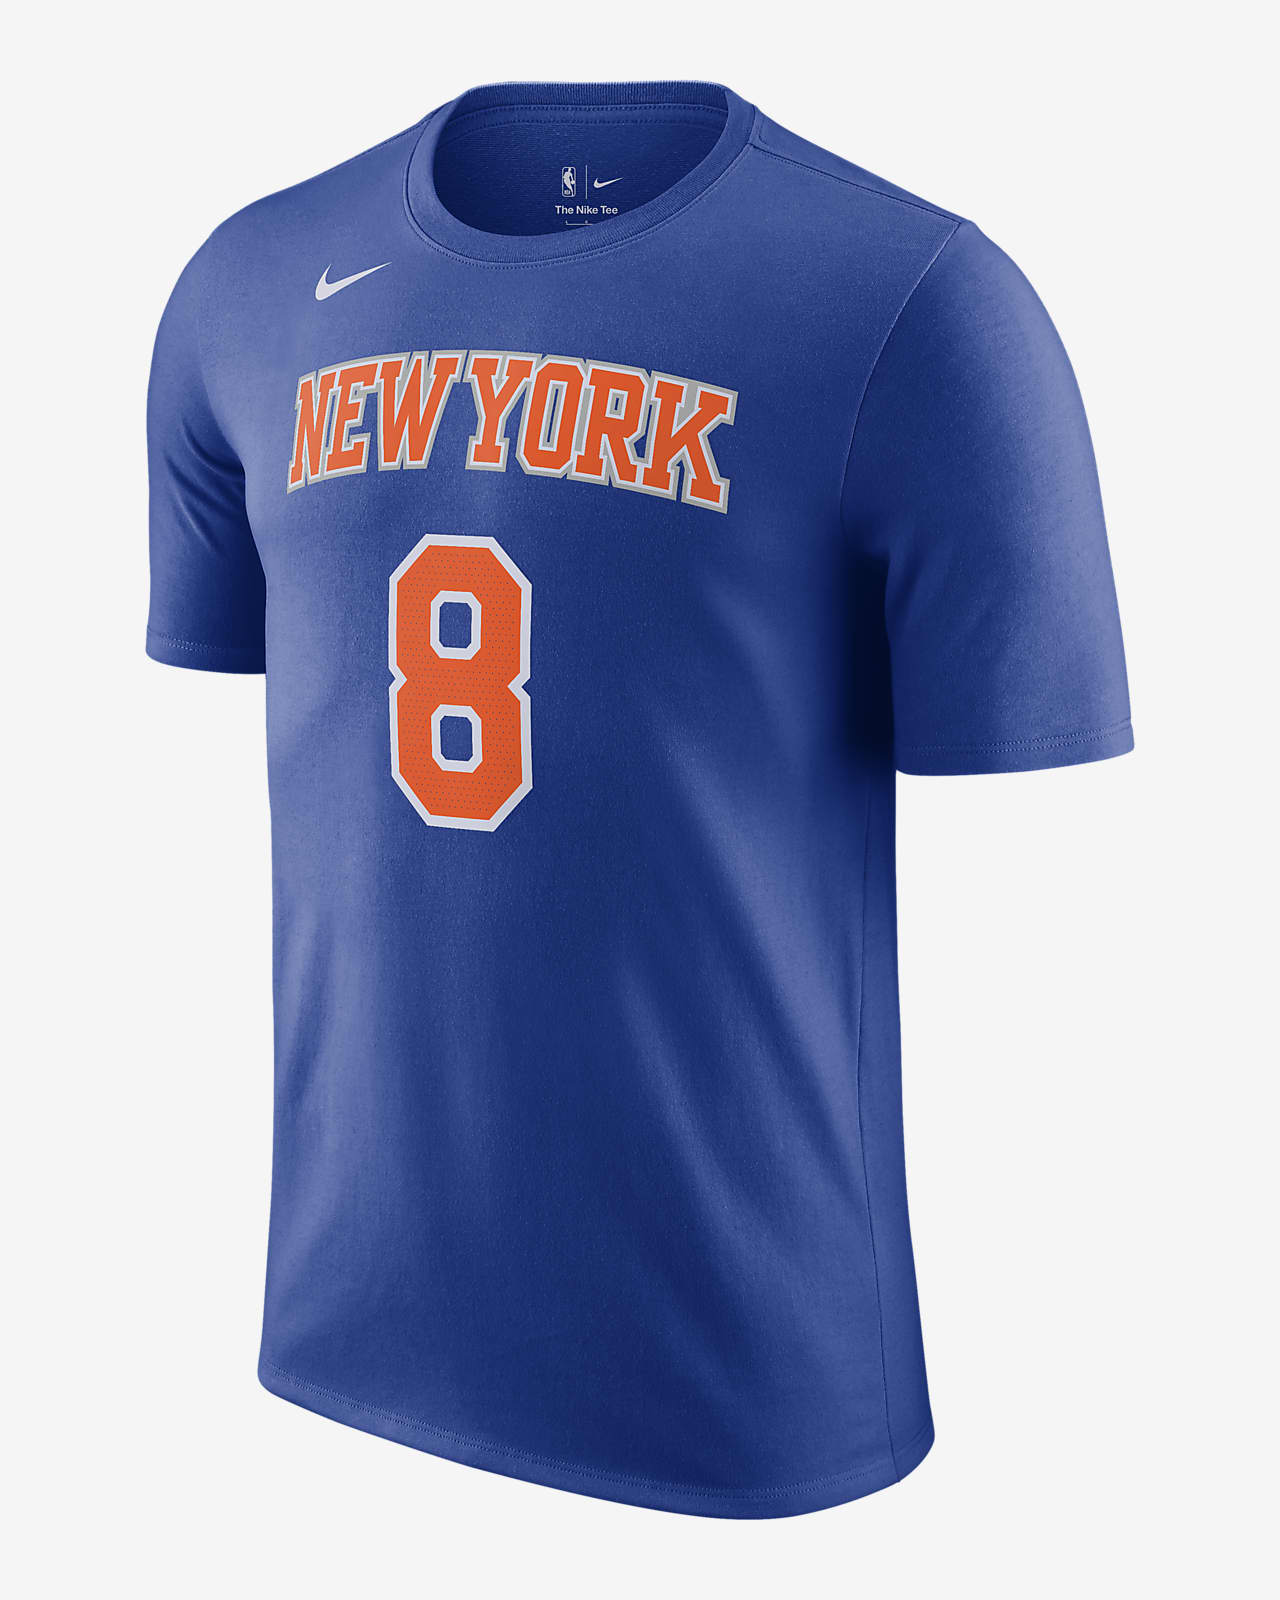 Playera Nike NBA para hombre New York Knicks